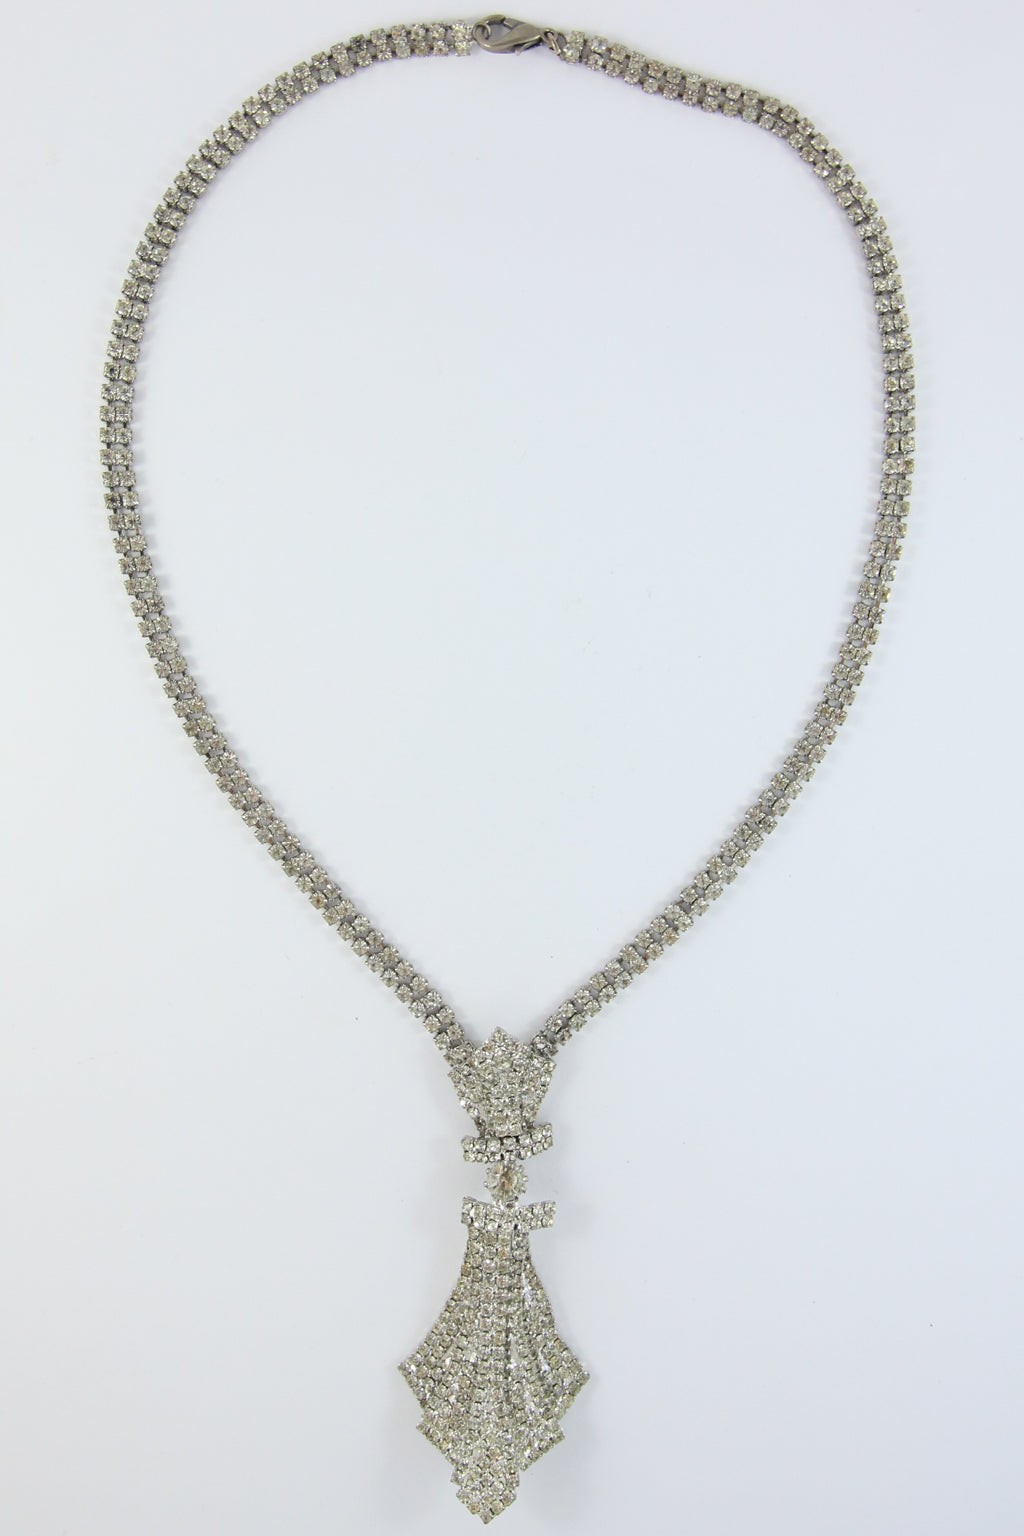 Vintage Austrian Crystal & Silver Necklace